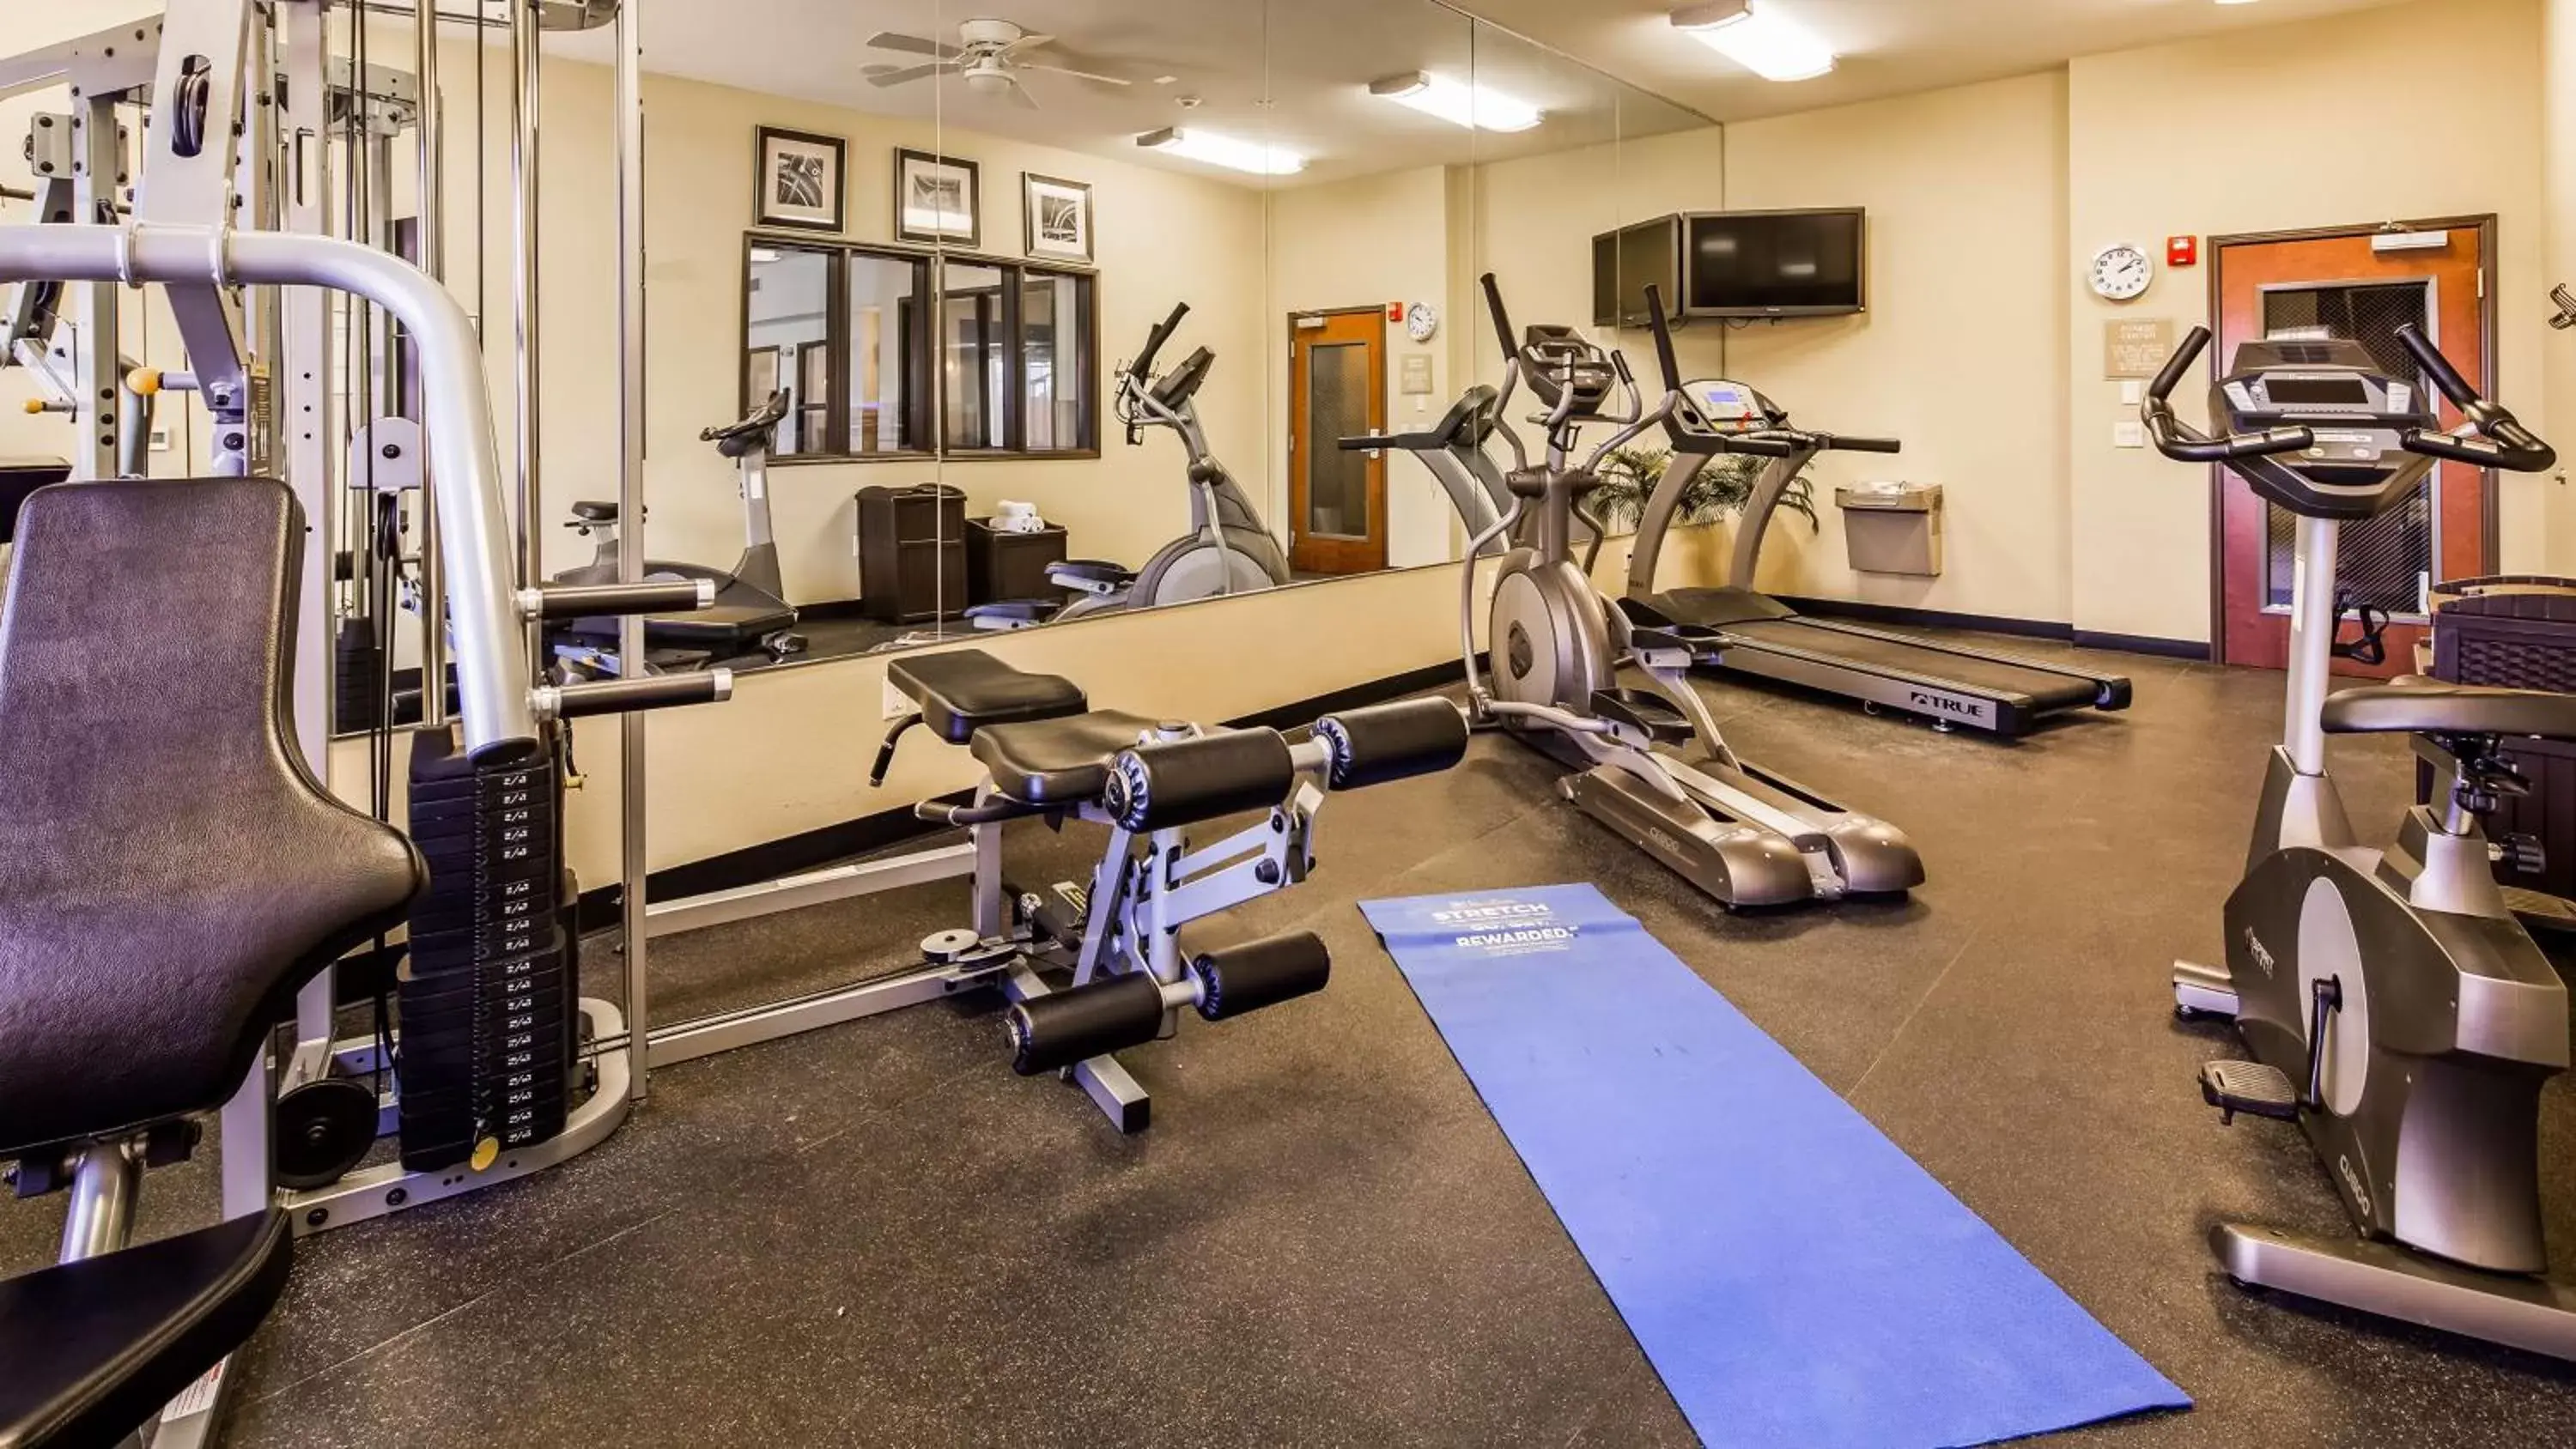 Fitness centre/facilities, Fitness Center/Facilities in Best Western Plus Seminole Hotel & Suites